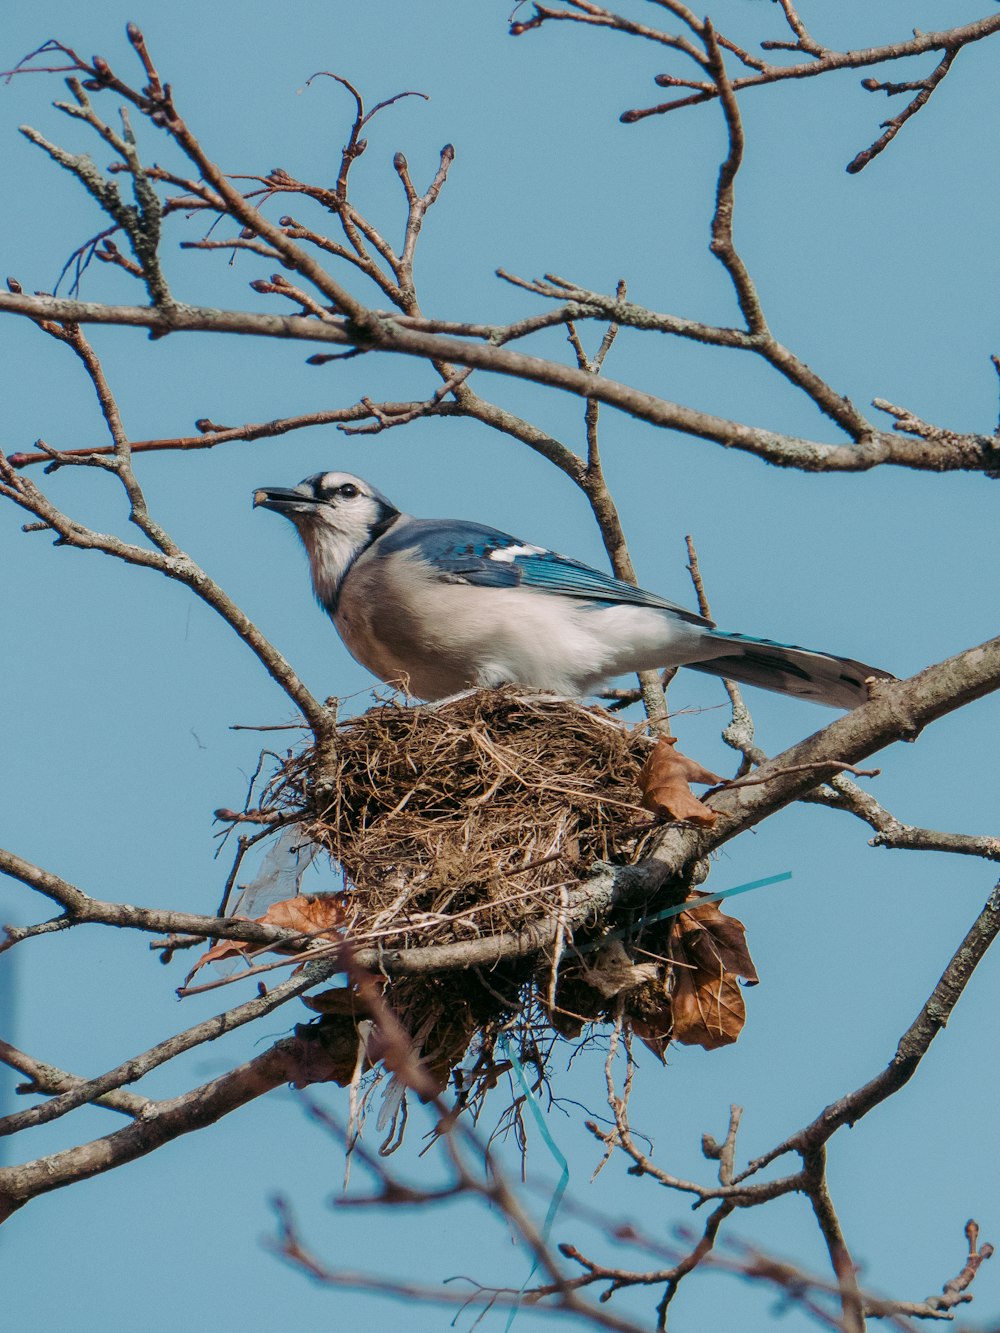 Blue And White Bird On Brown Nest Photo Free Jay Image On Unsplash